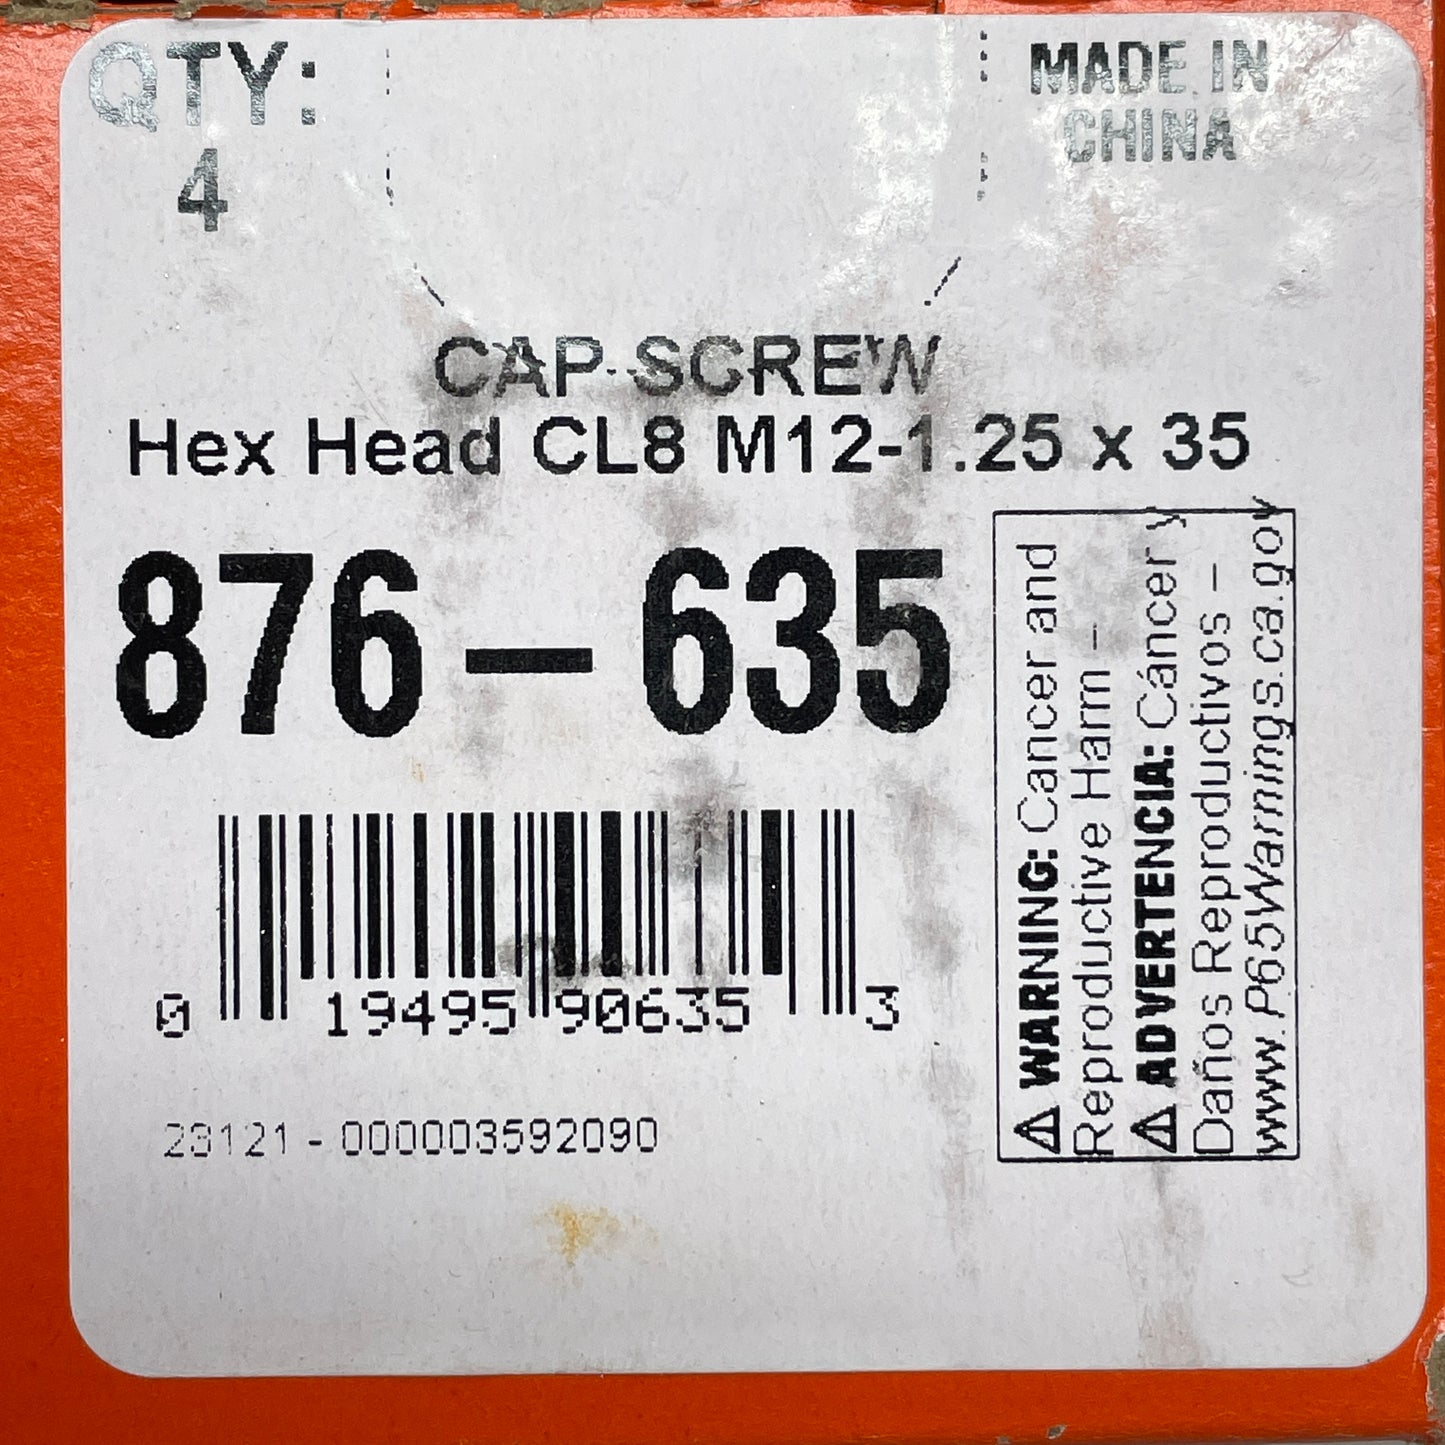 DORMAN (2 PACK) Hex Head Bolts Cap Screw M12-1.25 x 35 876-635